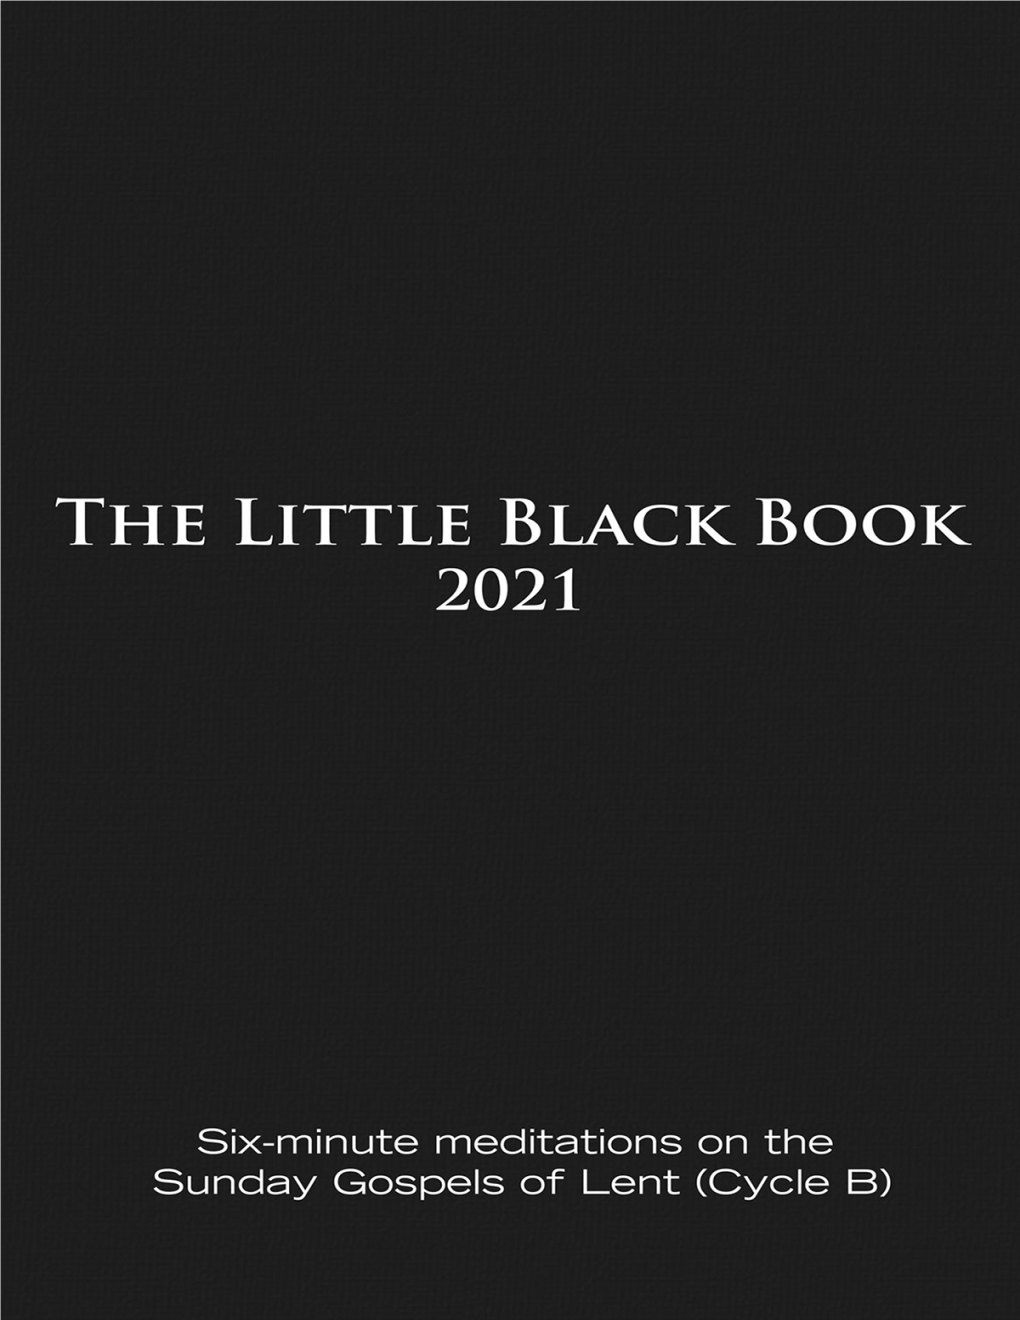 The Little Black Book for Lent 2021